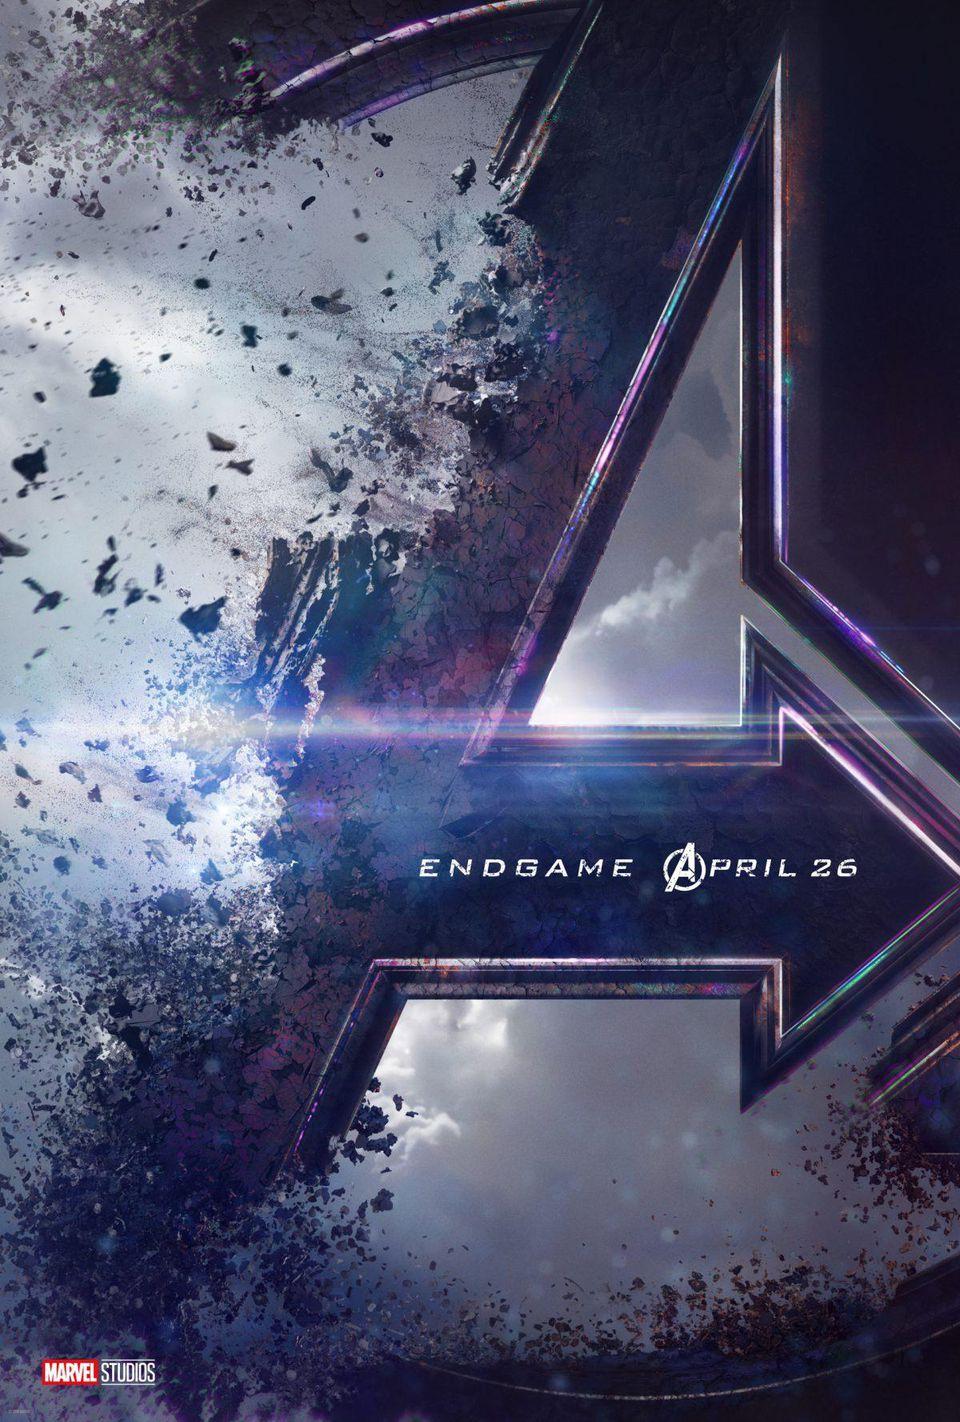 Avengers: Endgame' Super Bowl TV Spot Reveals New Footage